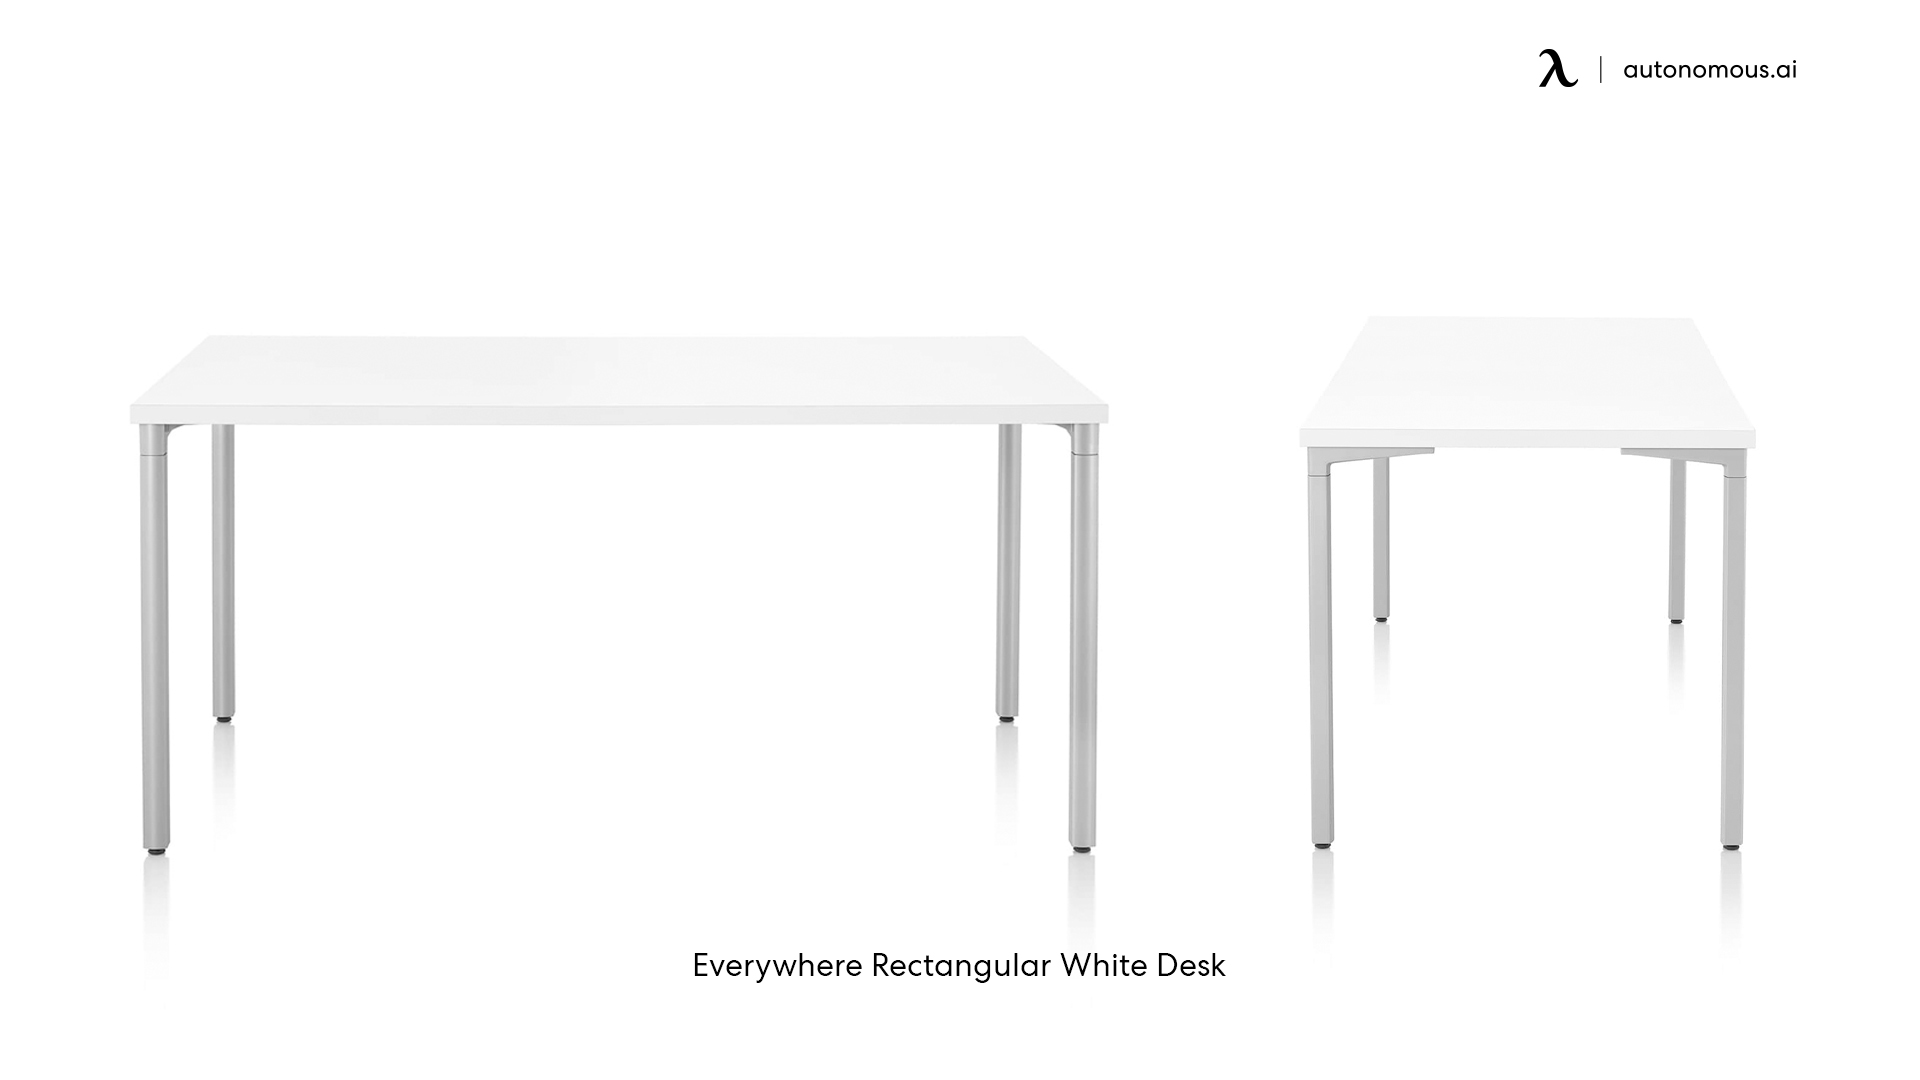 Everywhere Rectangular White Desk